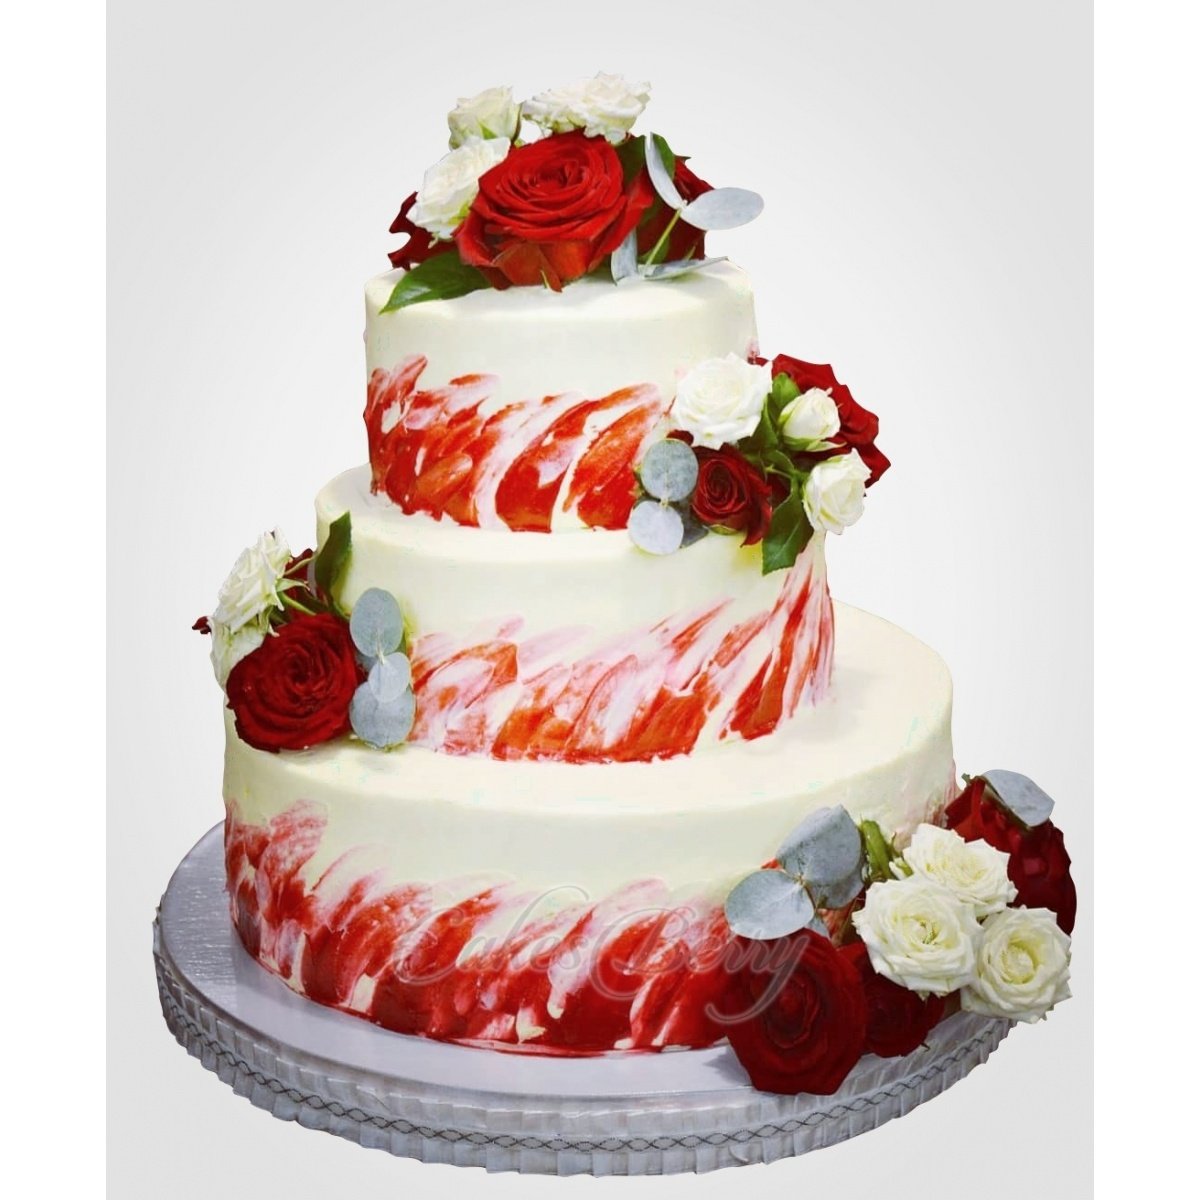 Фото трехъярусного. Свадебный торт!. Свадебный торт трехъярусный. Свадебные торты трех я русные. Свадебный торт многоярусный.